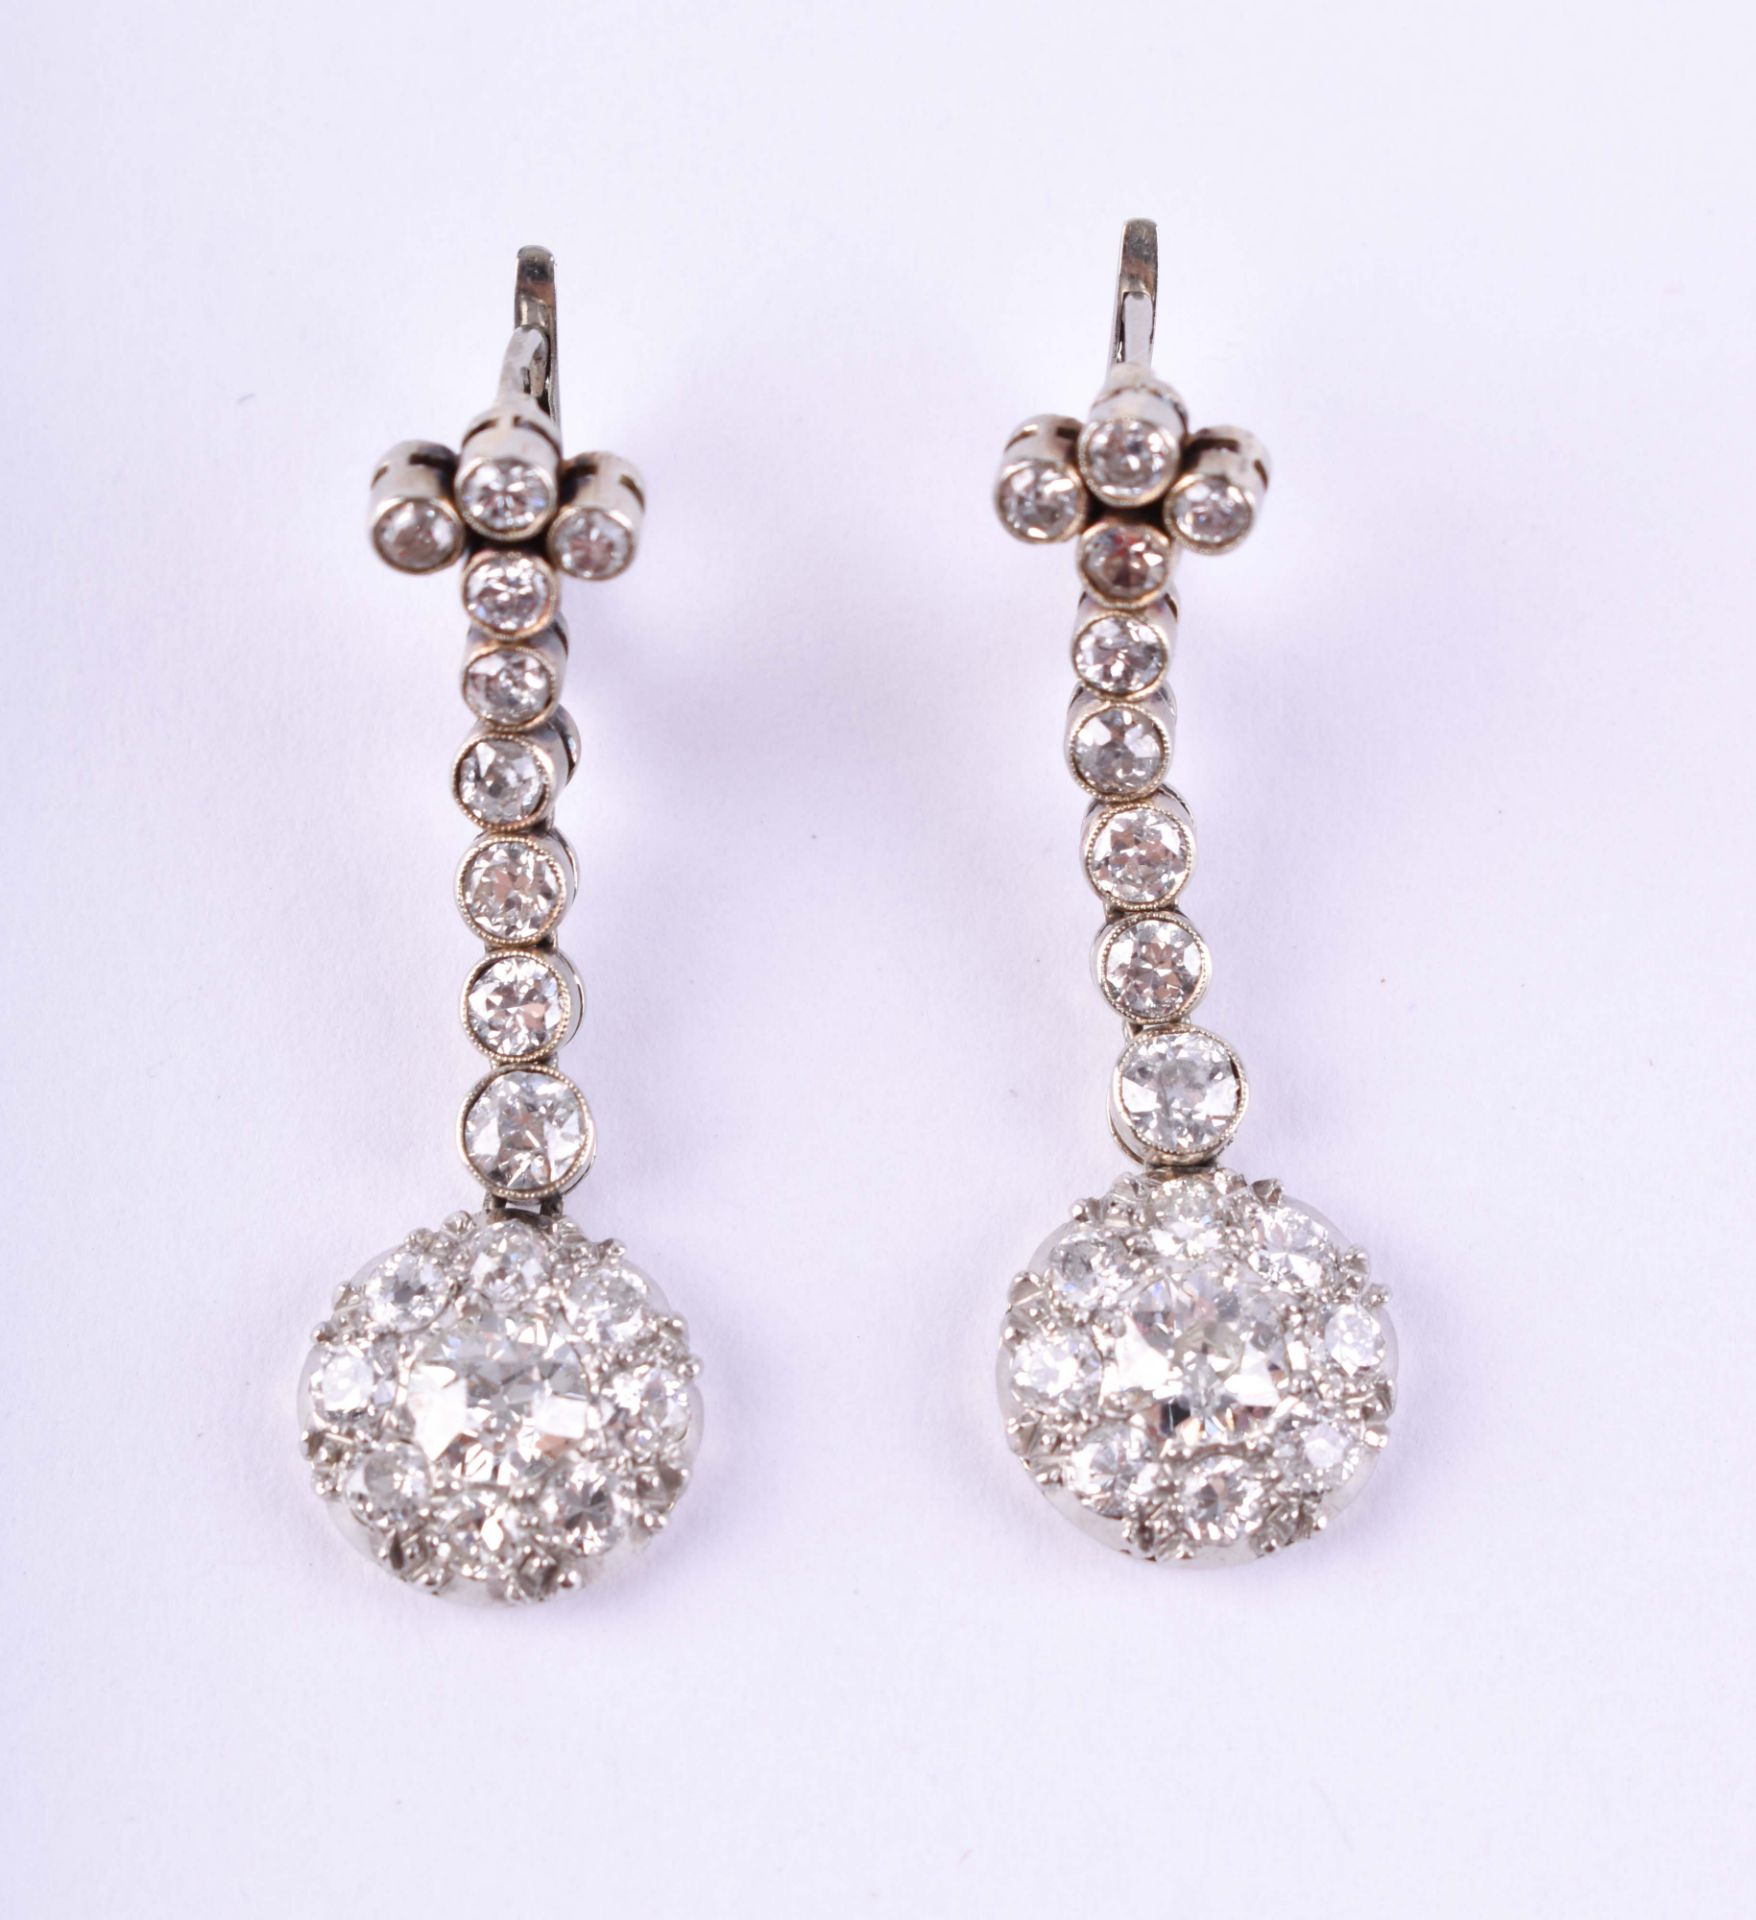  Brilliant earrings France around 1900